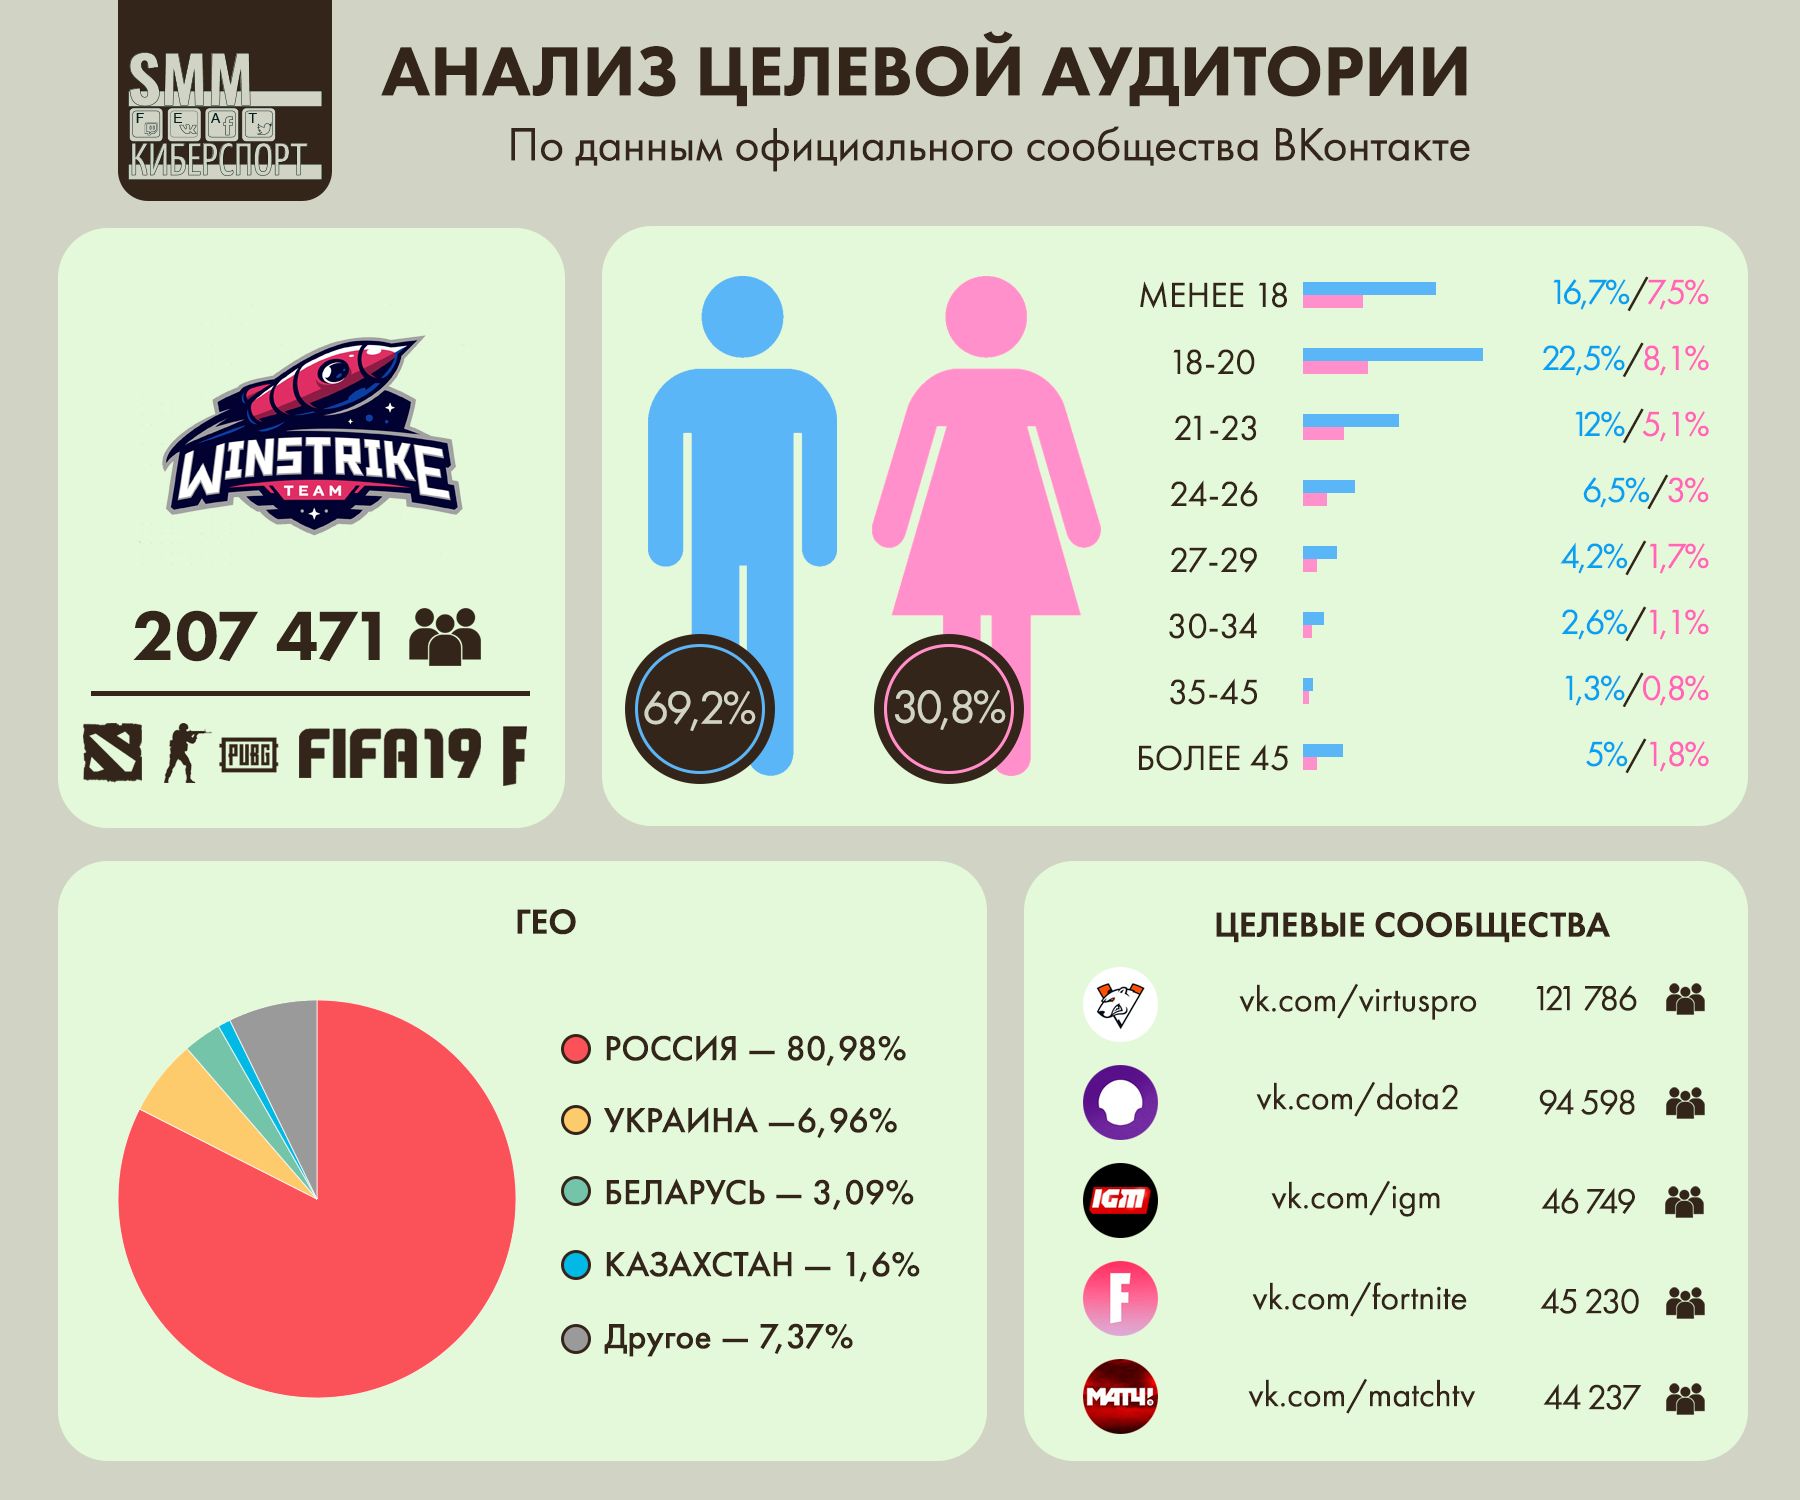 Анализ целевой аудитории ВКонтакте киберспортивного клуба Winstrike Team